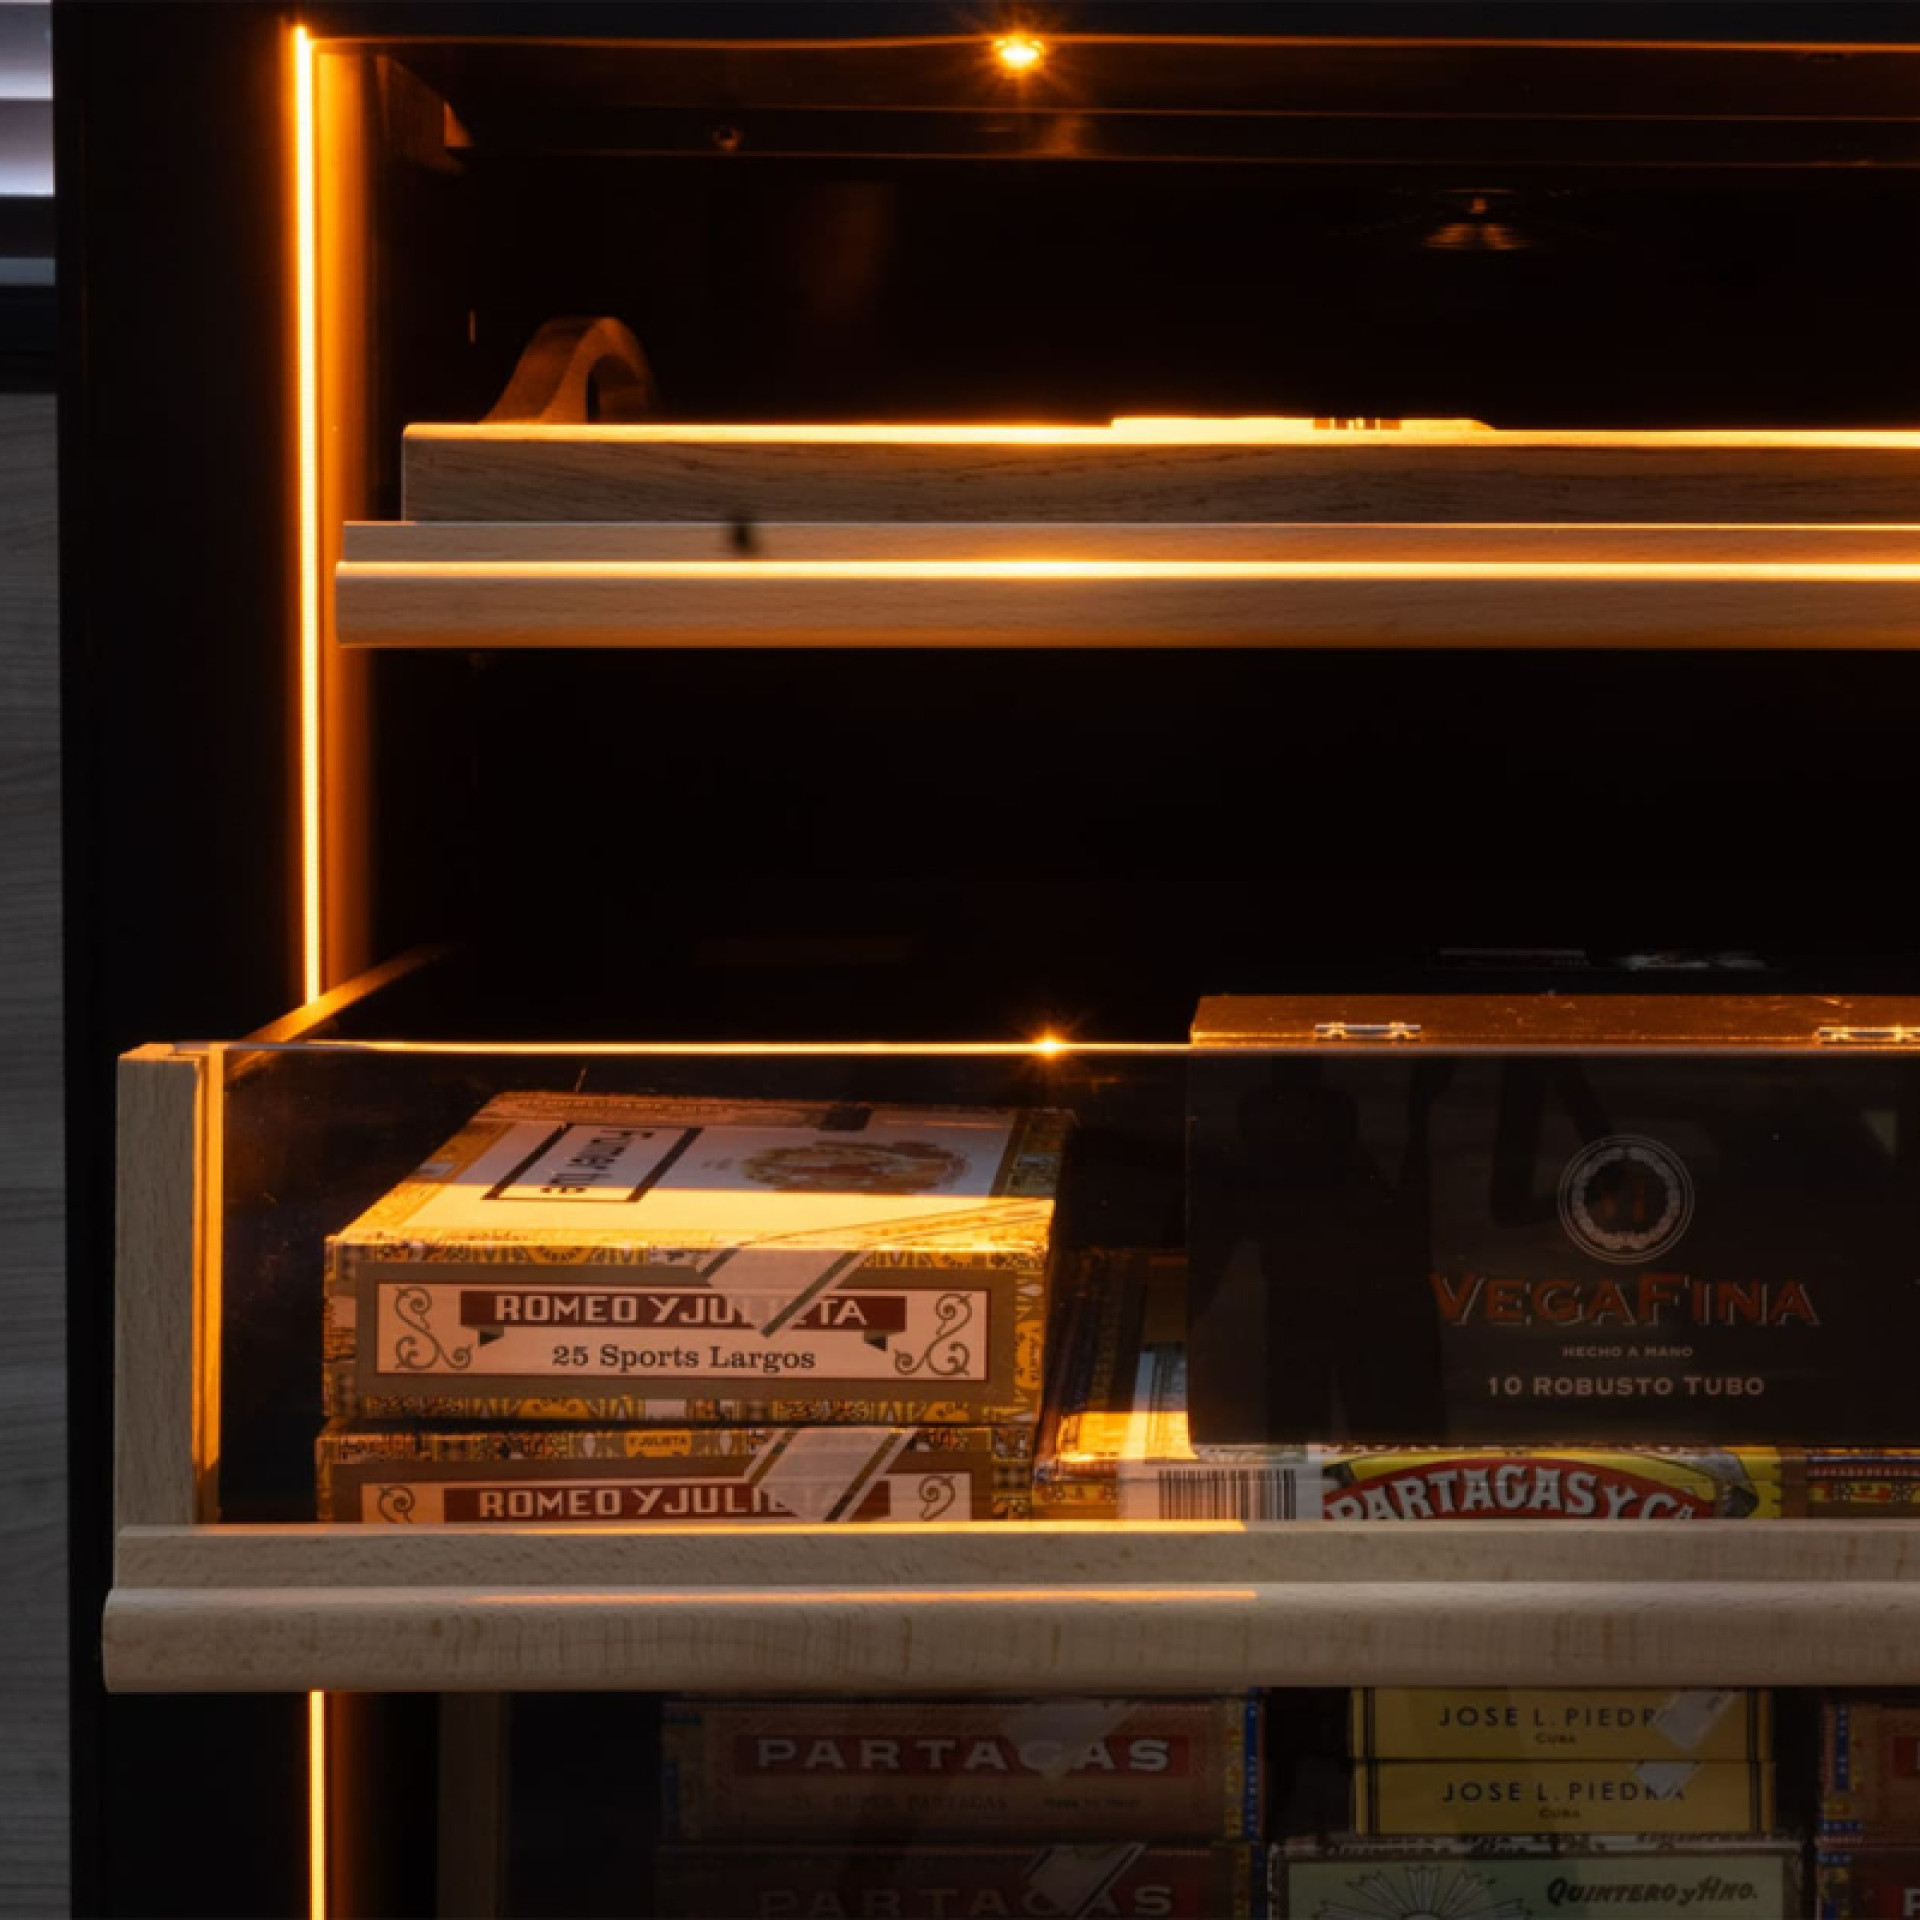 Large storage capacity sliding drawer shelf for organizing and storing your cigar boxes.